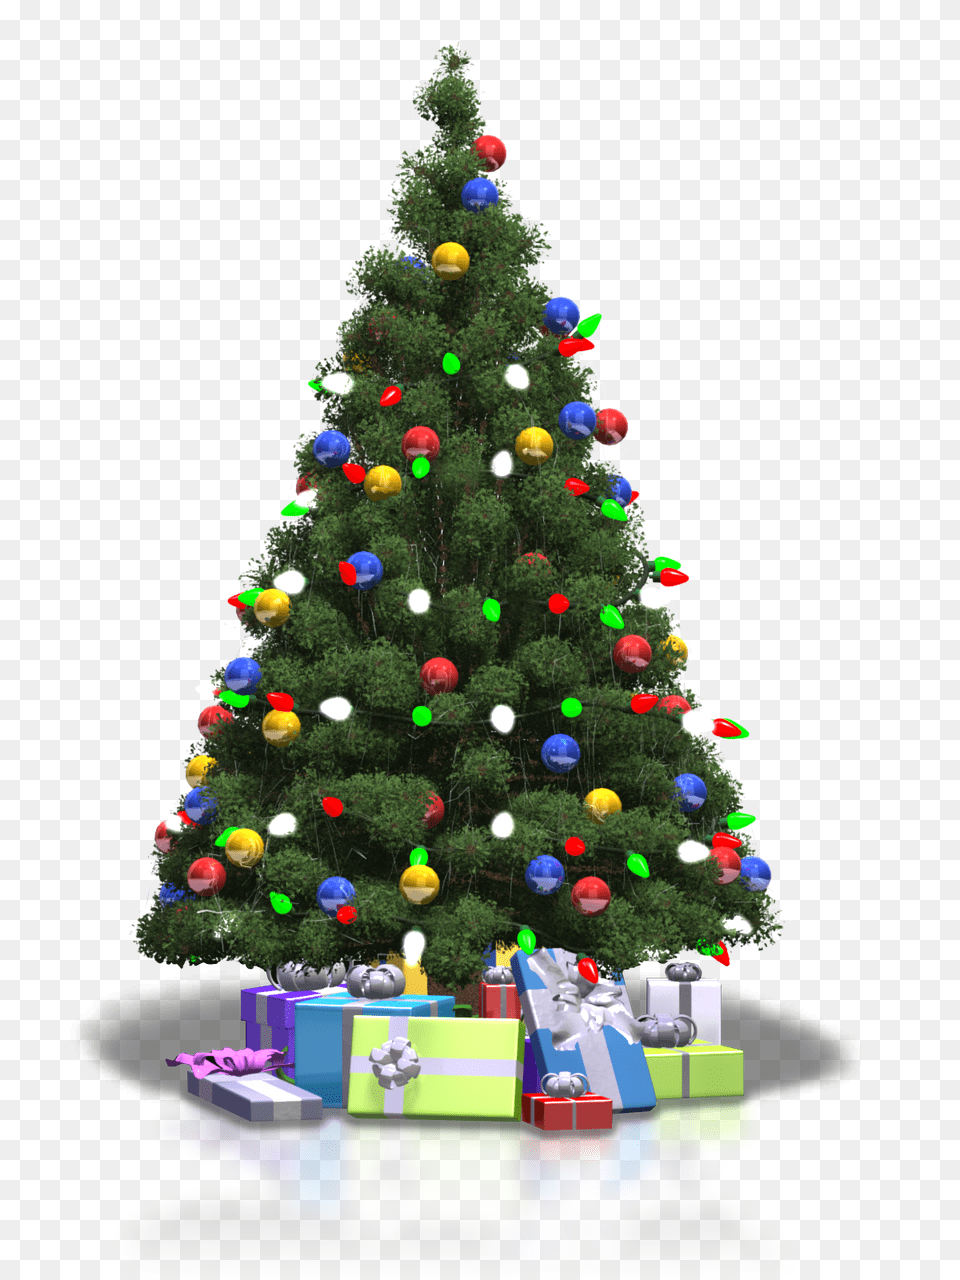 Christmas Tree, Plant, Christmas Decorations, Festival, Christmas Tree Png